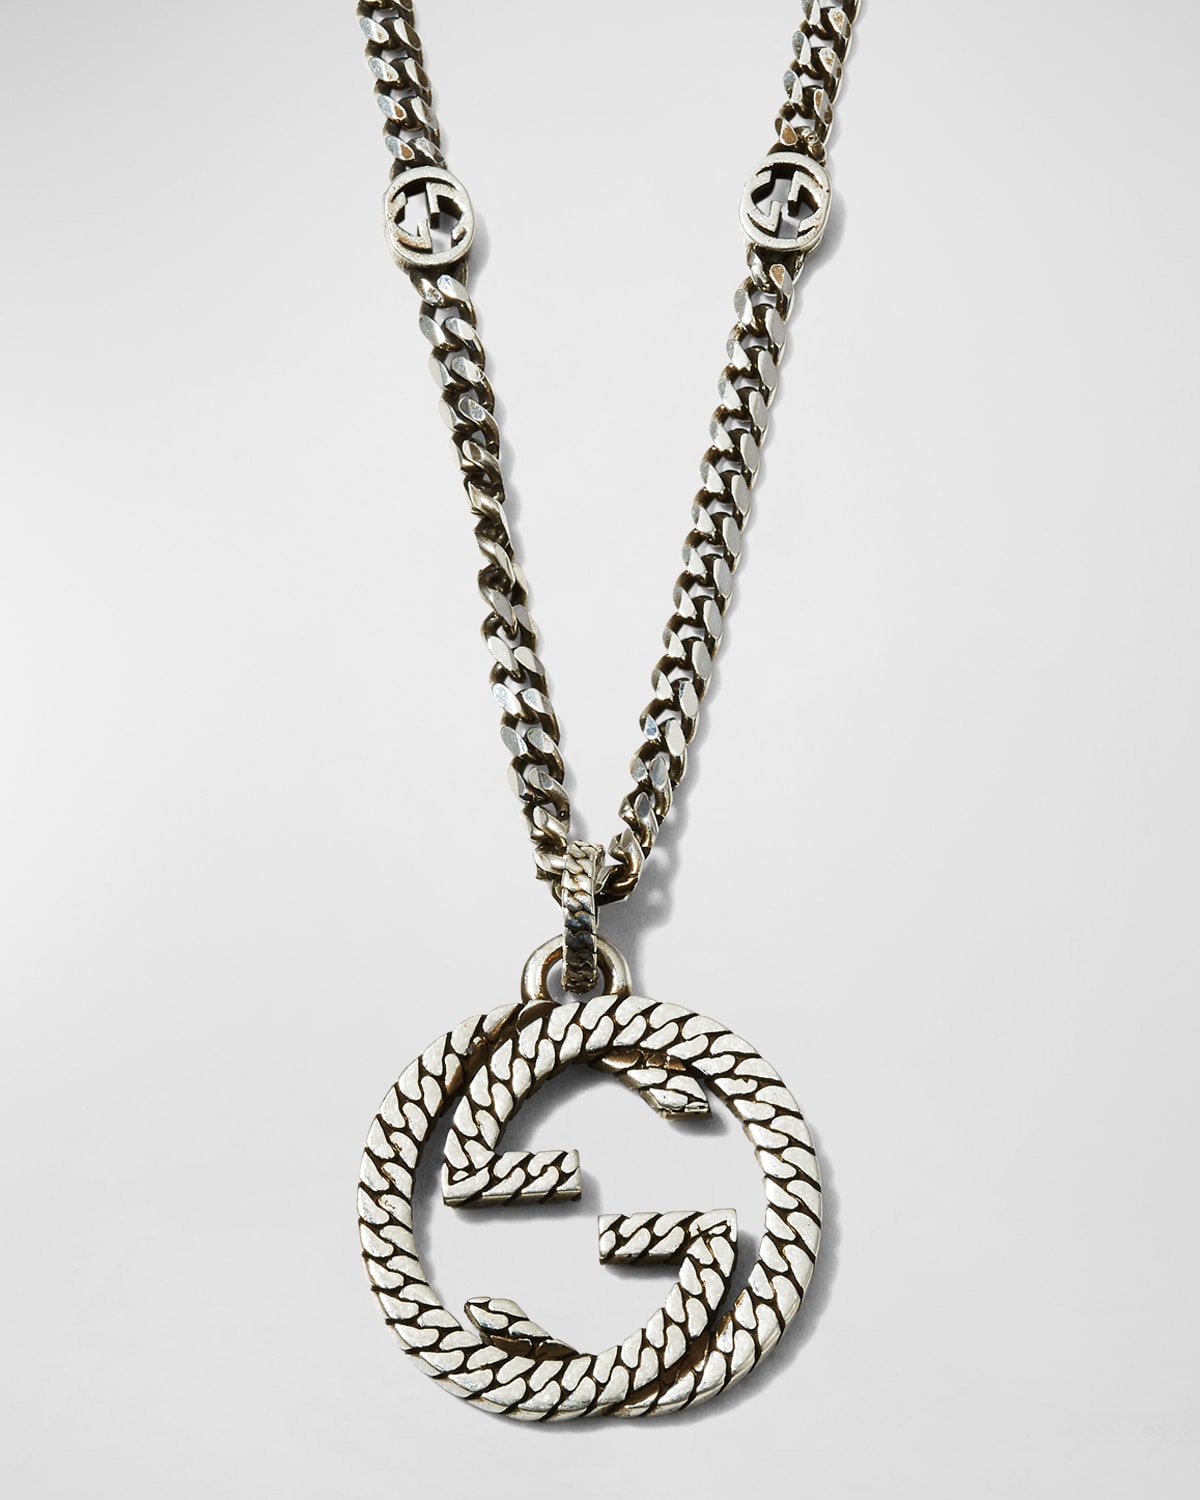 Thin Interlocking G enamel necklace in 925 sterling silver